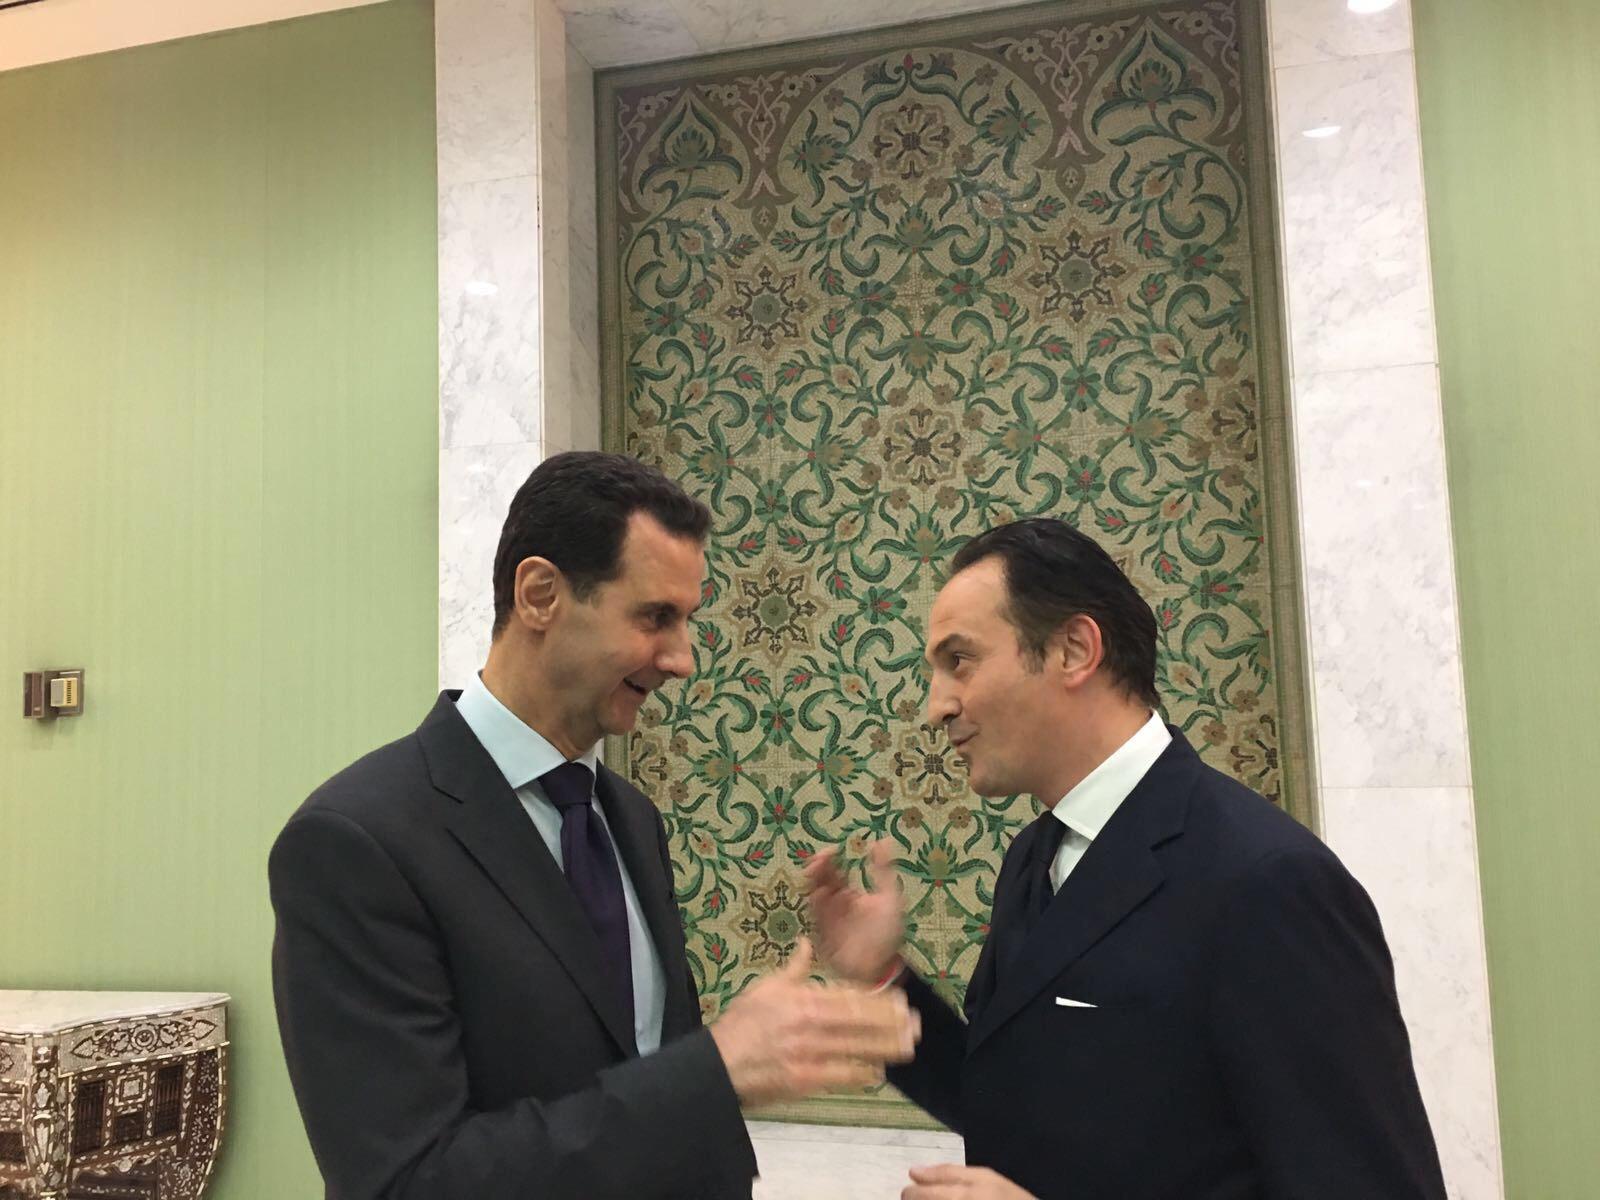 Cirio Assad